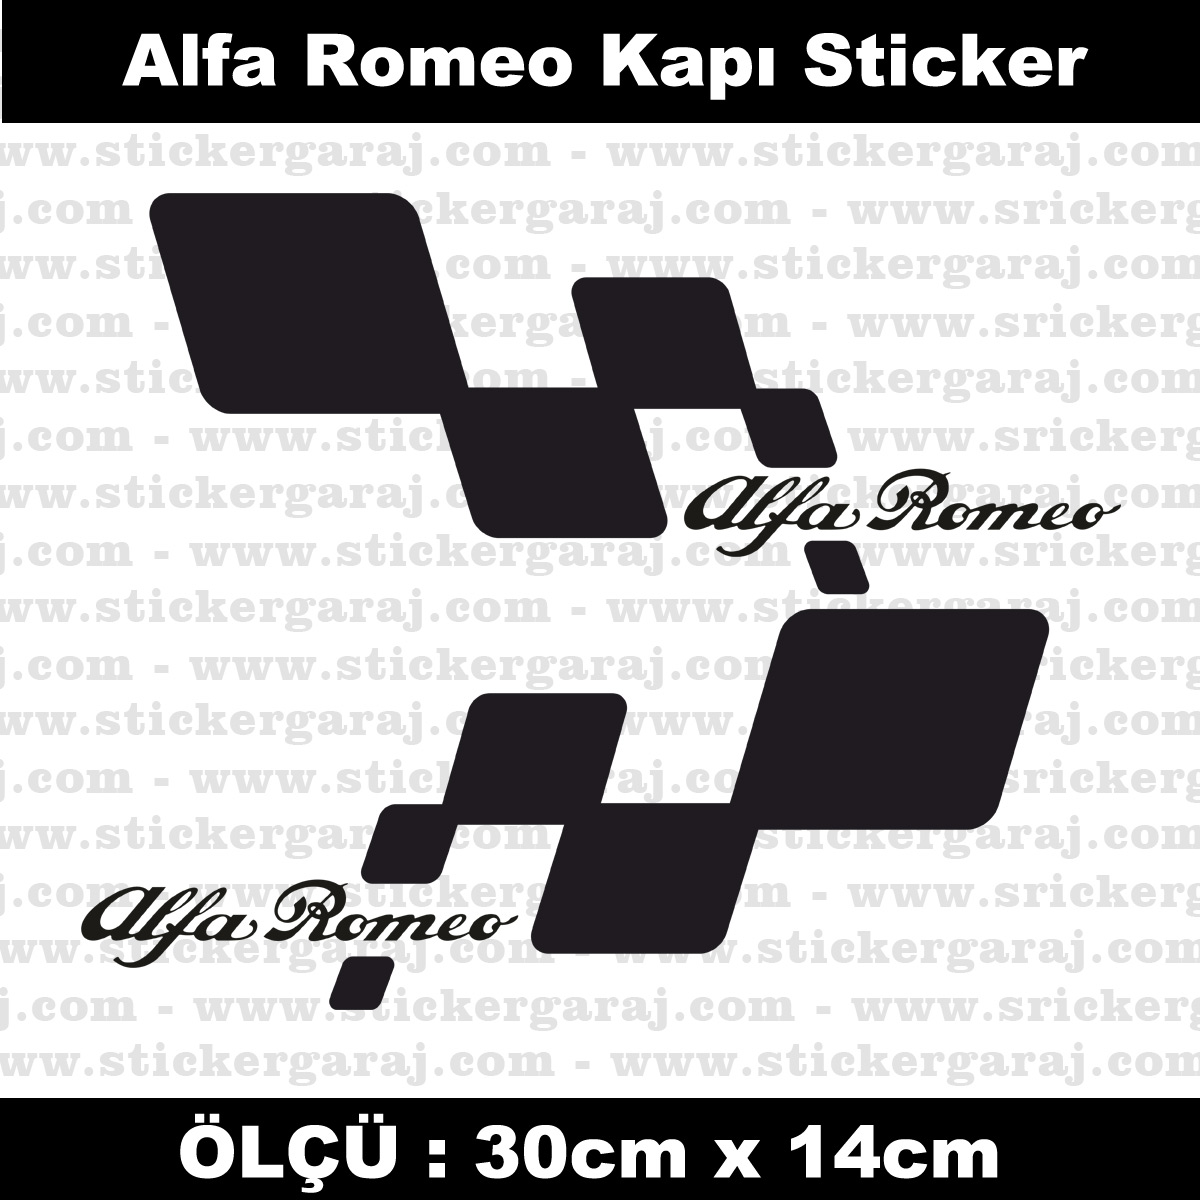 Alfa Romeo yan kapi serit sticker - Alfa Romeo yan kapı şerit sticker 2li